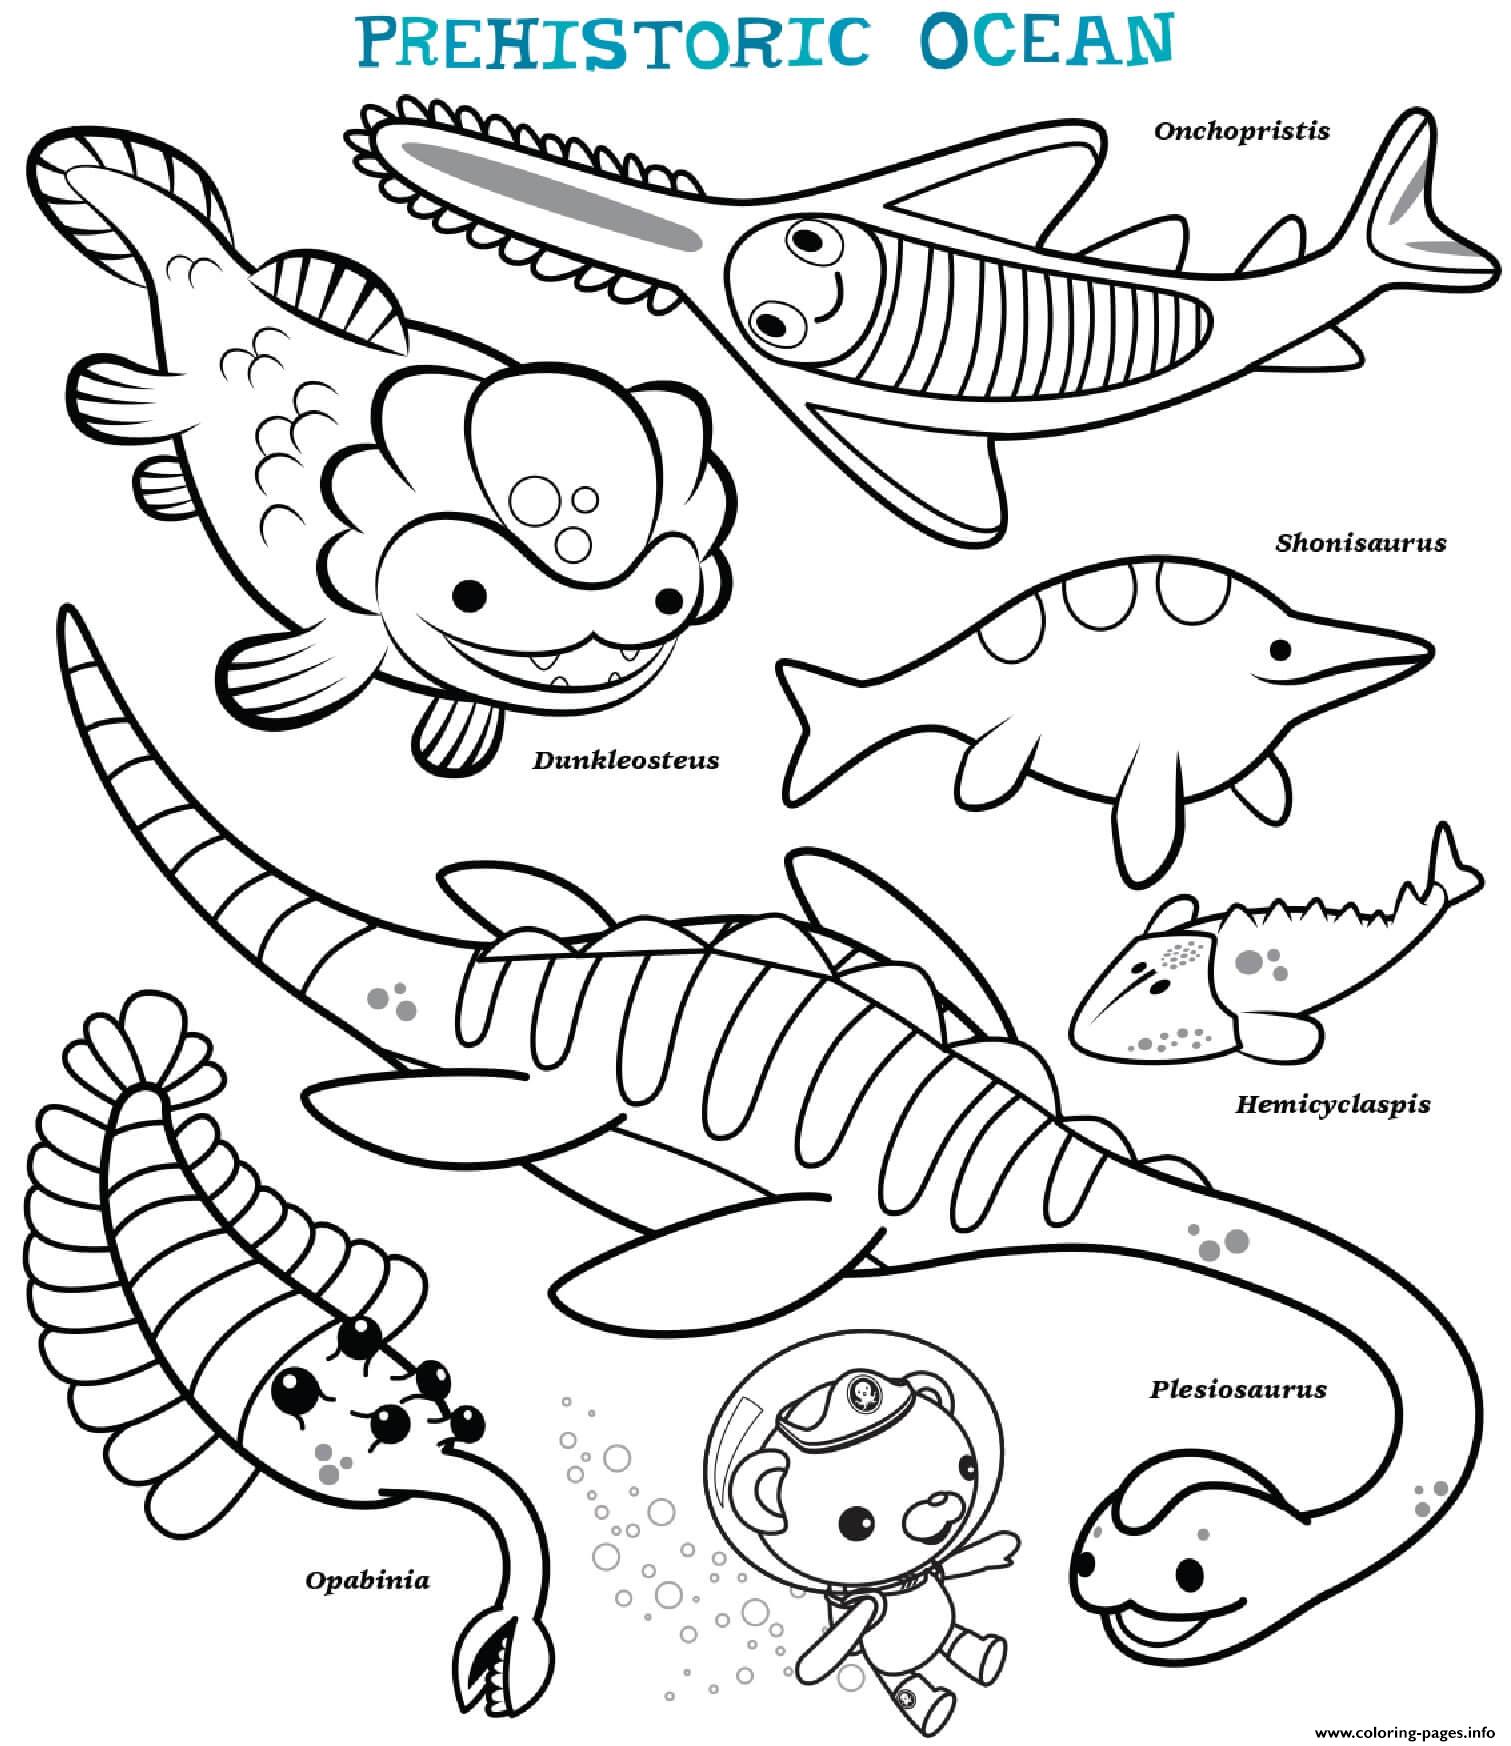 Prehistoric Ocean Octonauts coloring